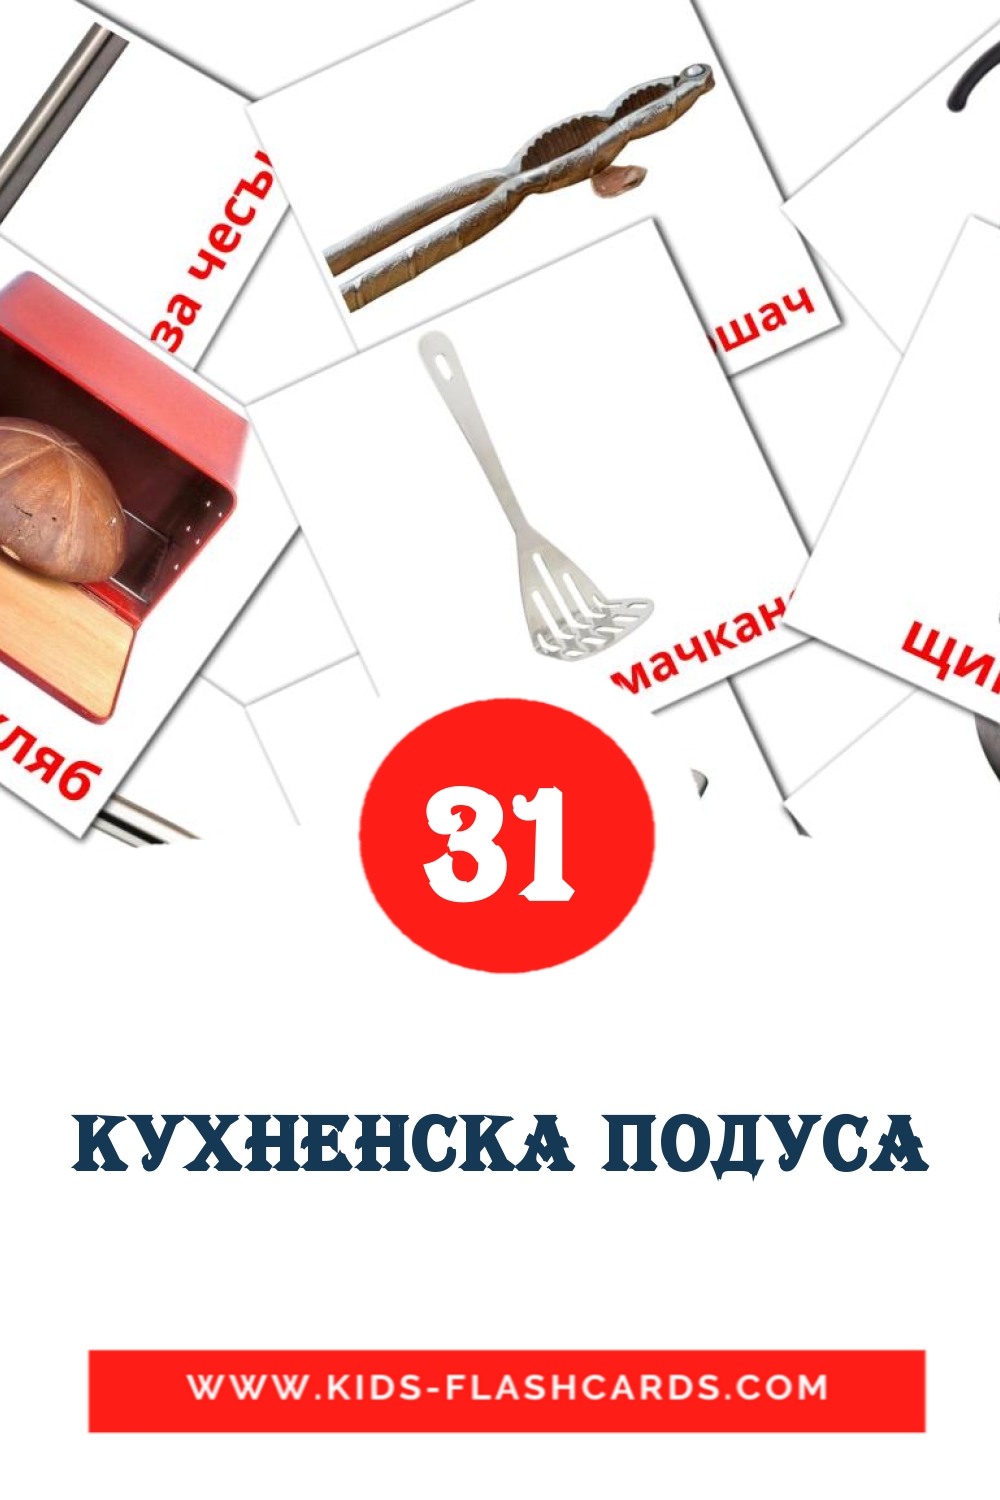 31 carte illustrate di Кухненска подуса per la scuola materna in bulgaro